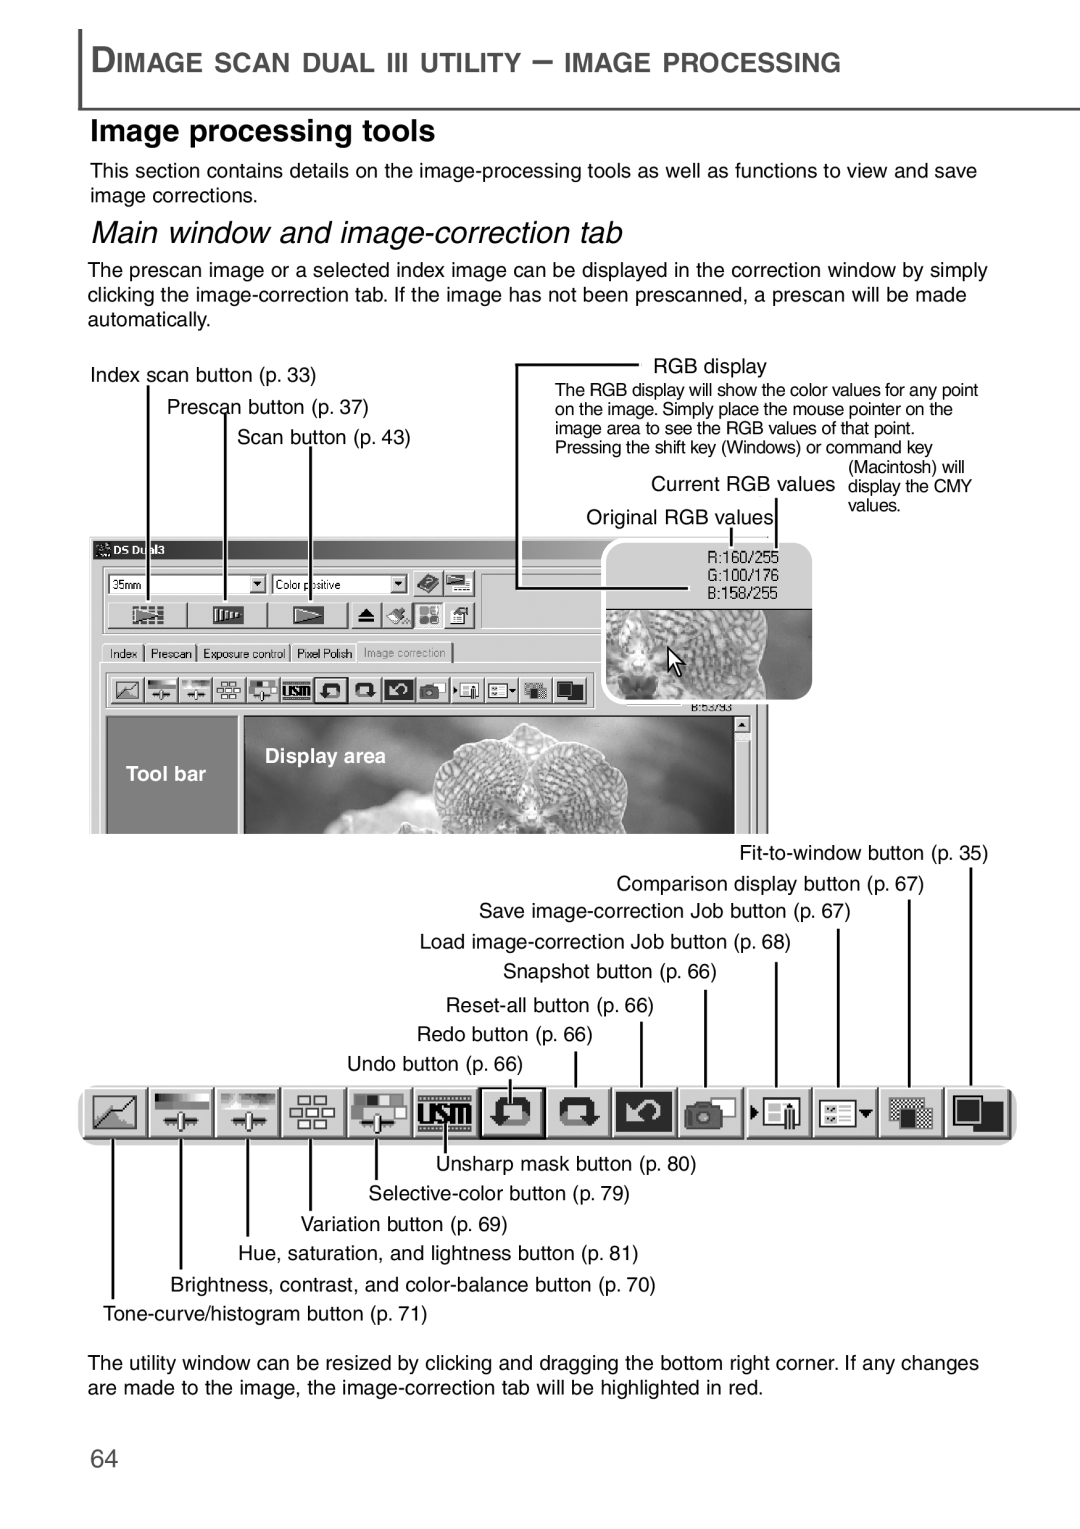 Konica Minolta AF-2840 Image processing tools, Main window and image-correctiontab, Display area Tool bar 